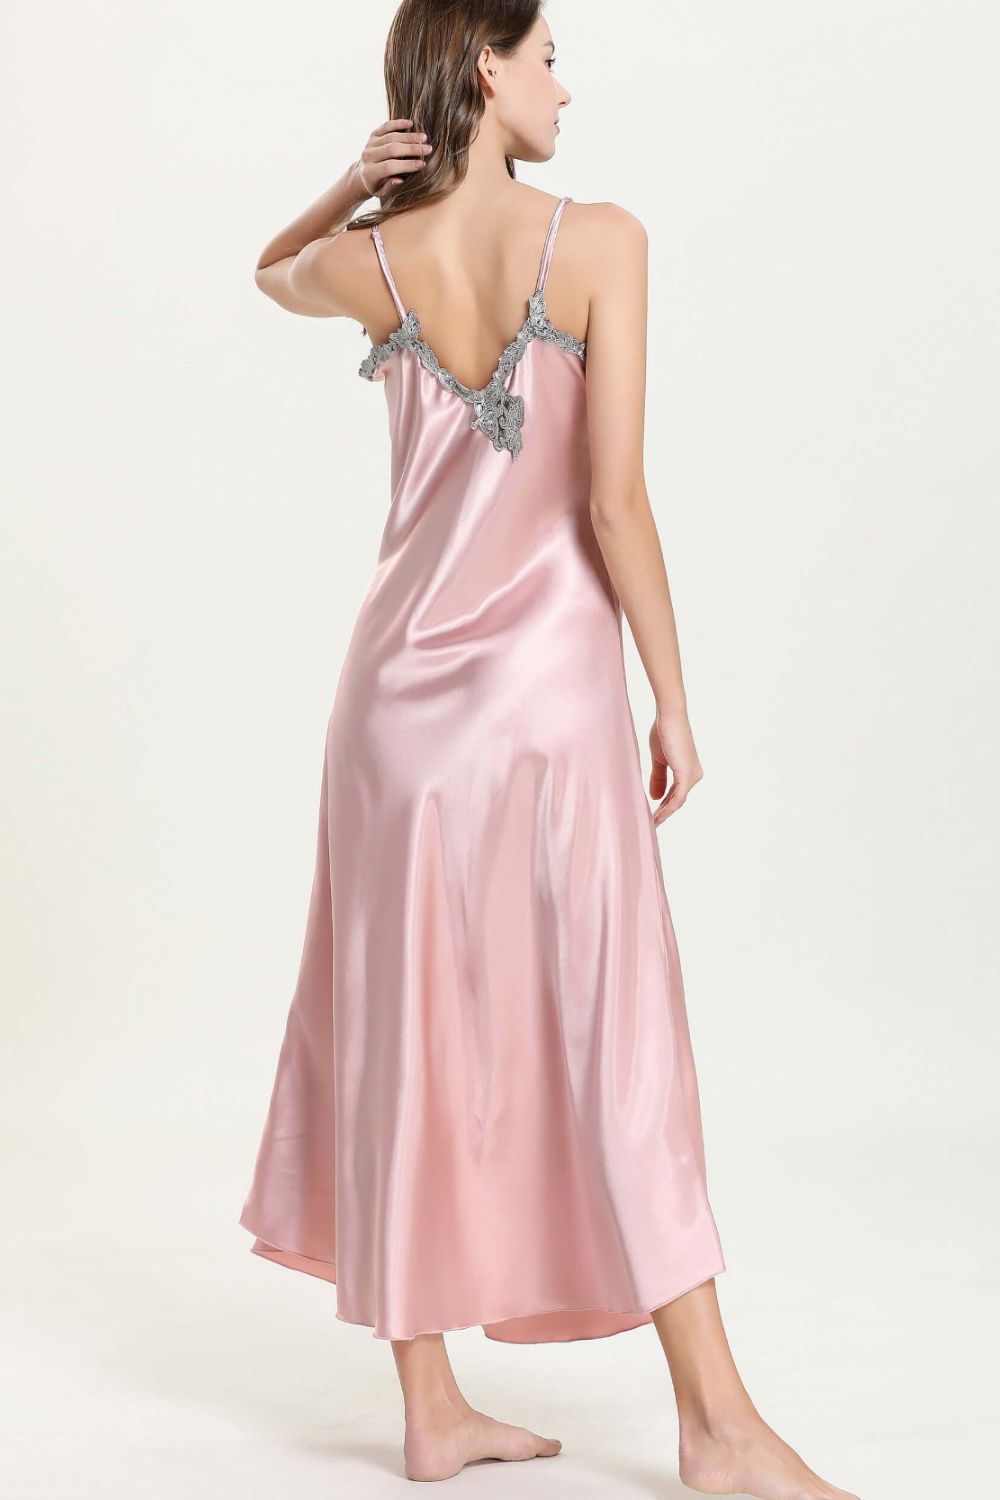 Full Size Lace Trim V-Neck Spaghetti Strap Satin Night Dress Sizes M-3X